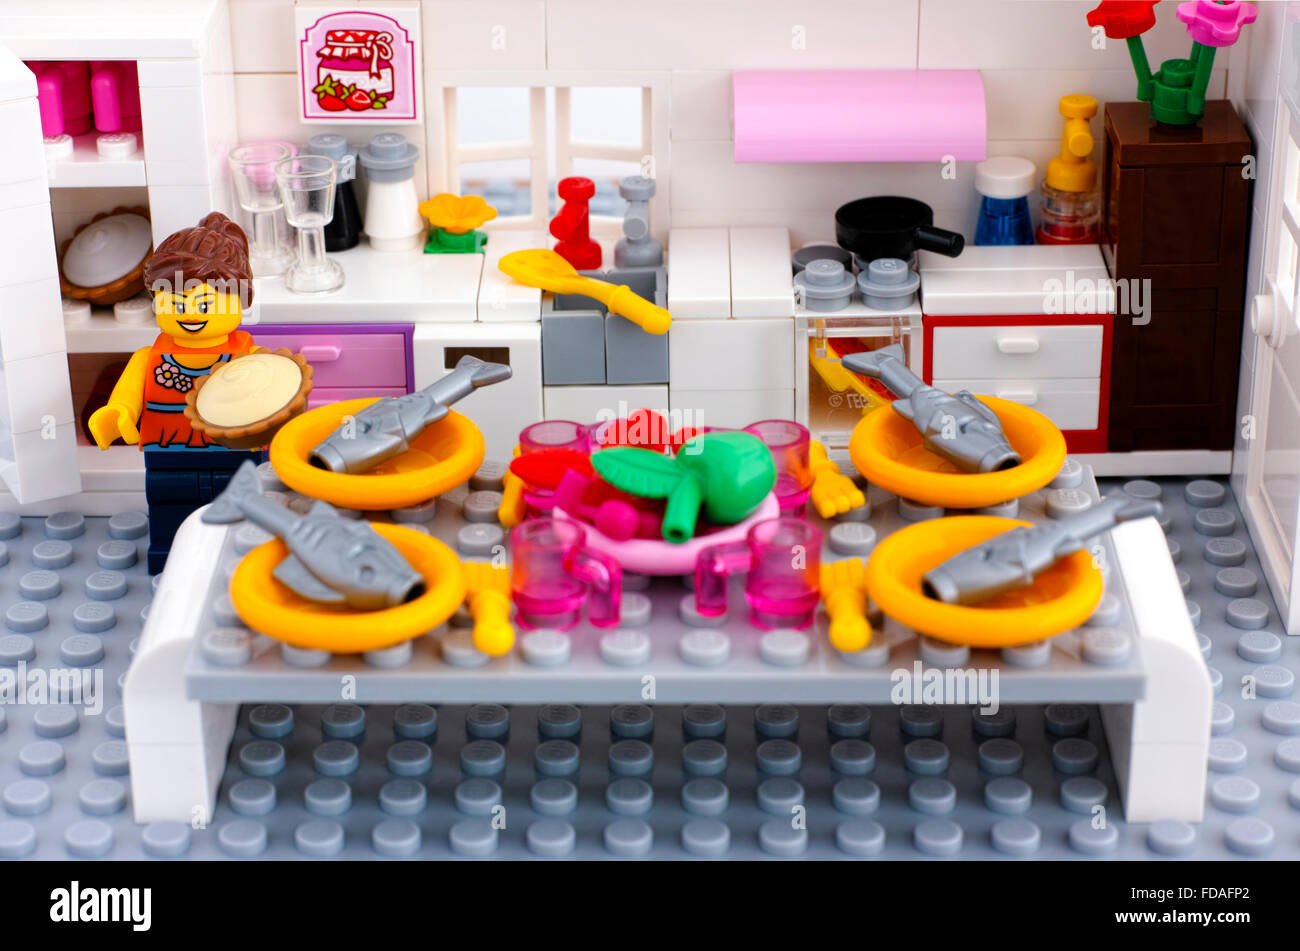 lego kitchen set